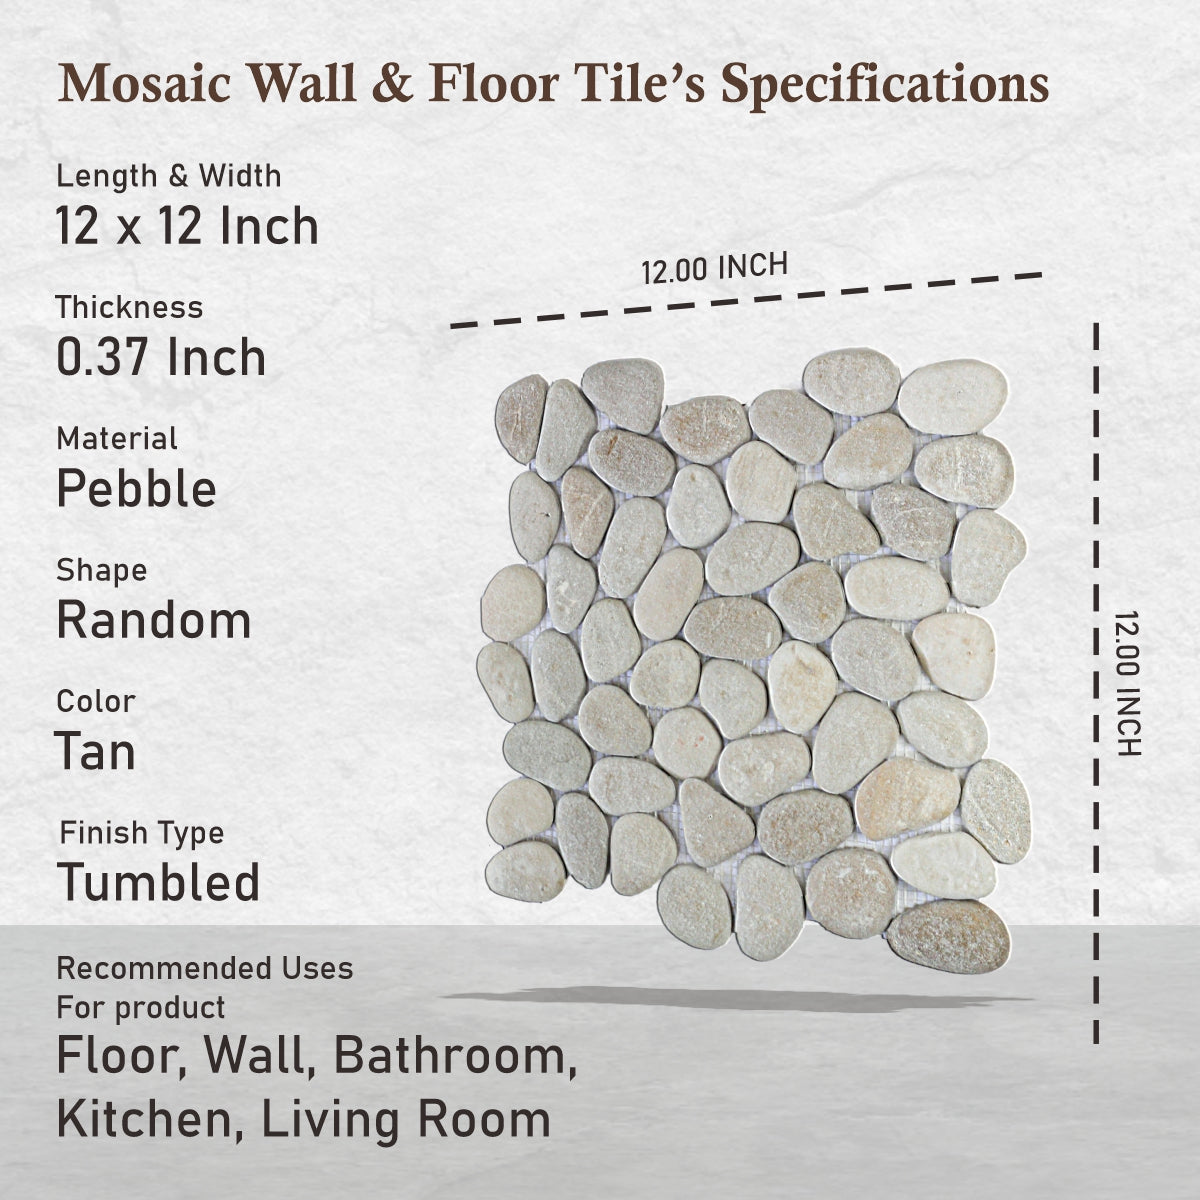 Tan Stone Tile for Wall and Floor, Pebble Mosaic Tile